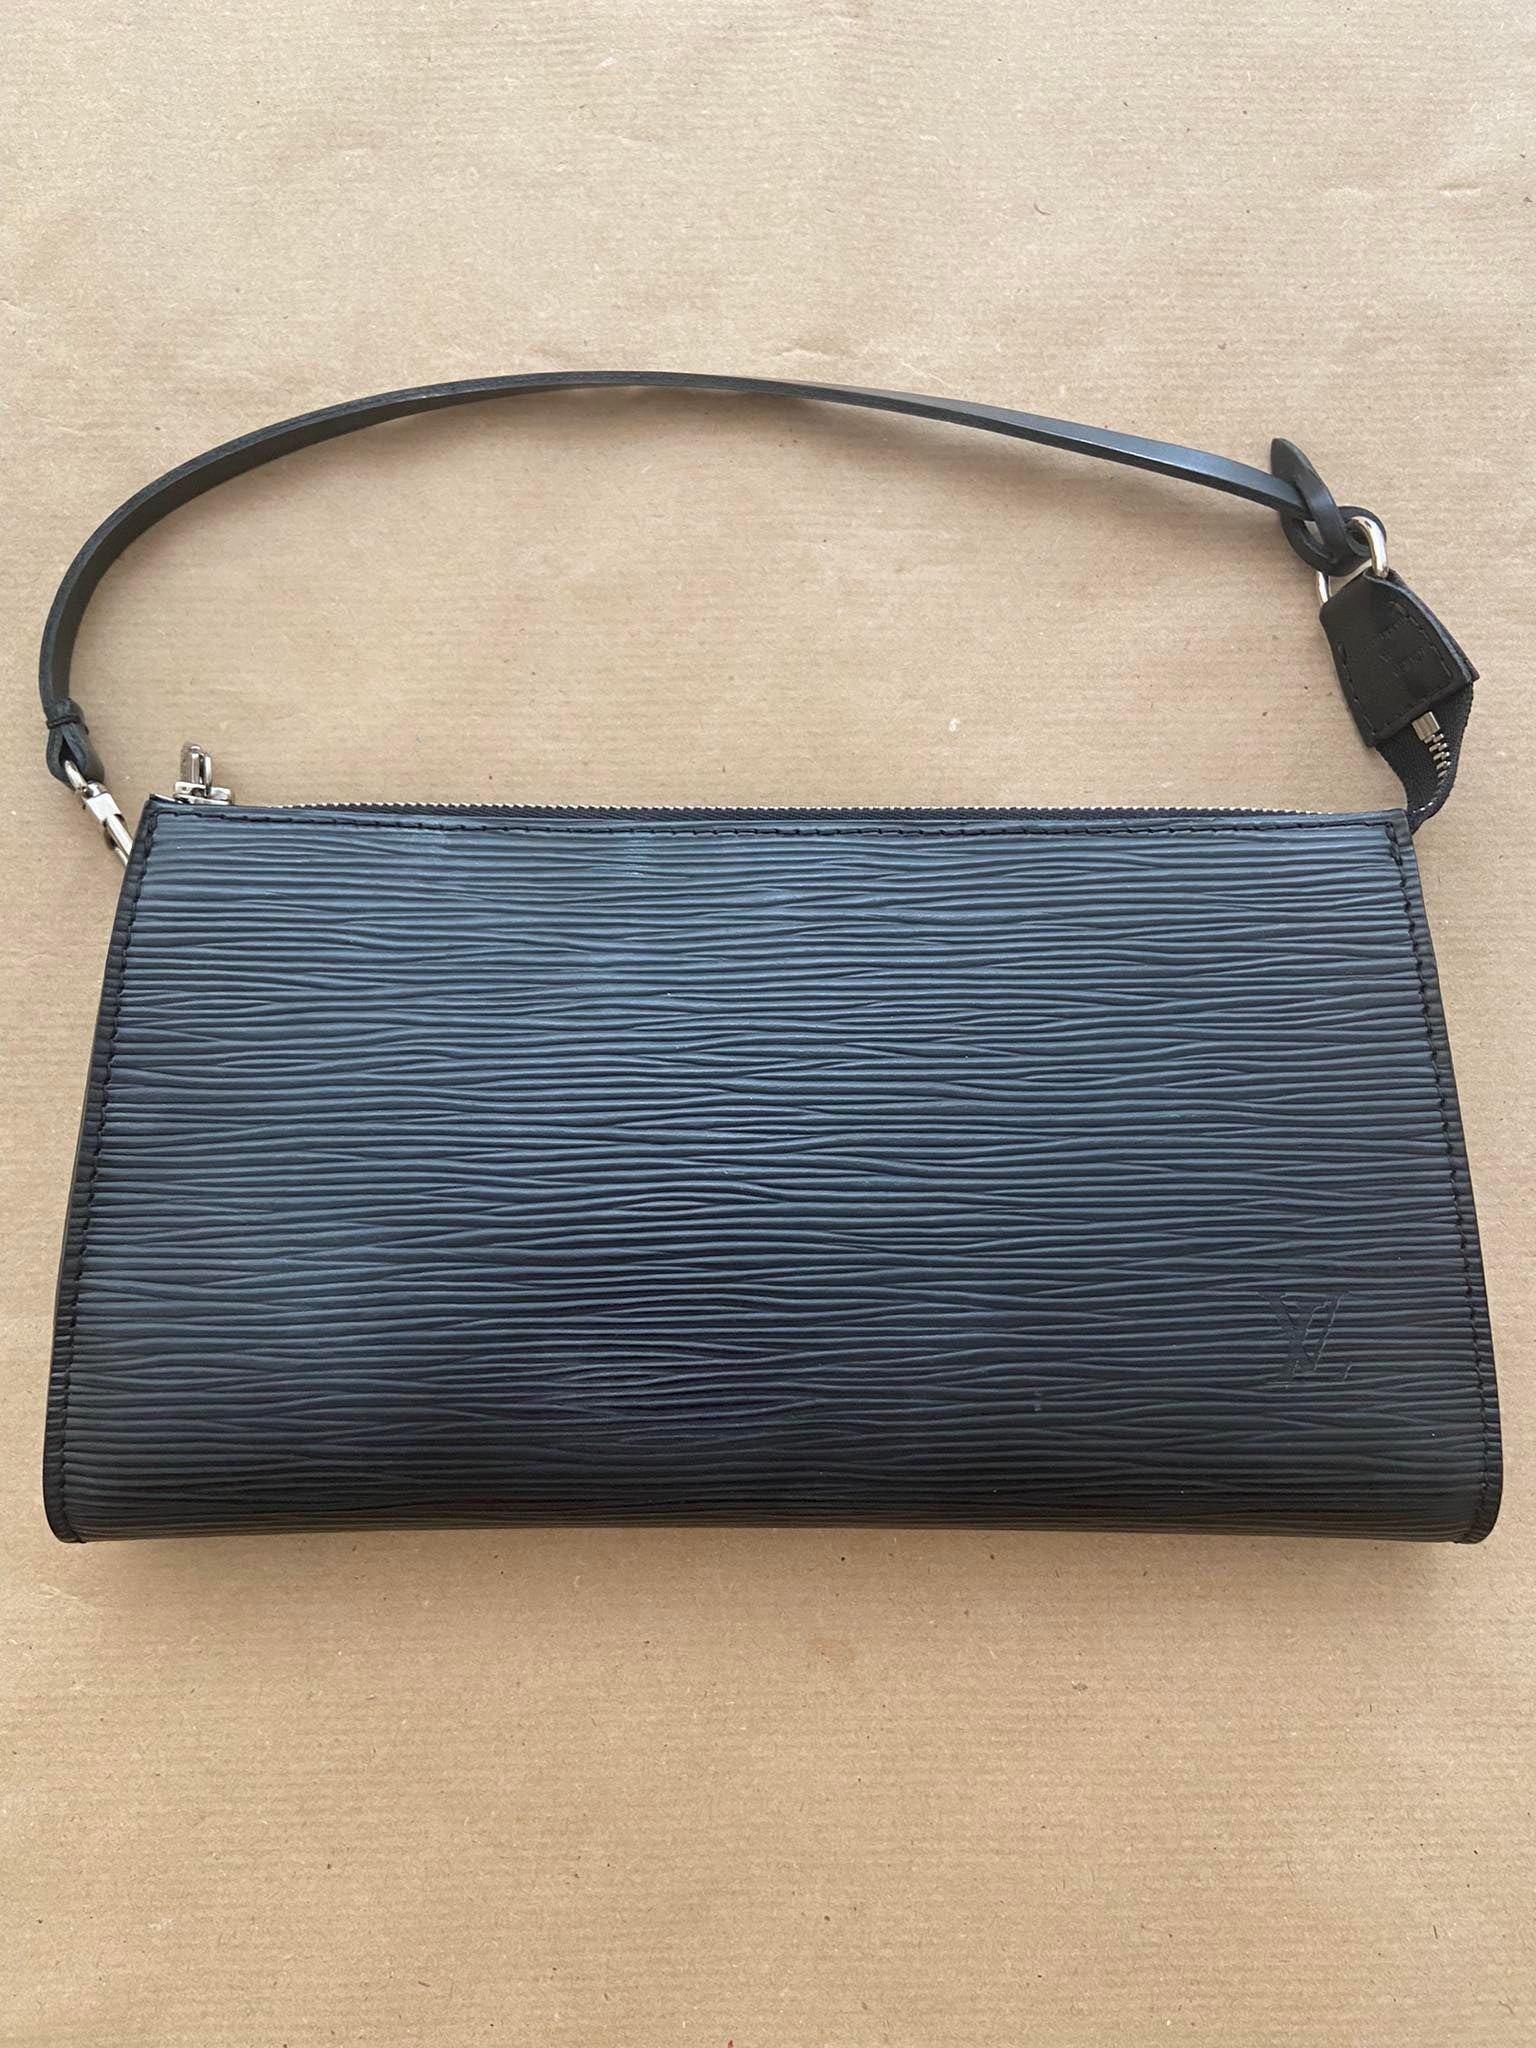 LOUIS VUITTON ACCESSOIRE CLUTCH/WRIST BAG, patent leather with